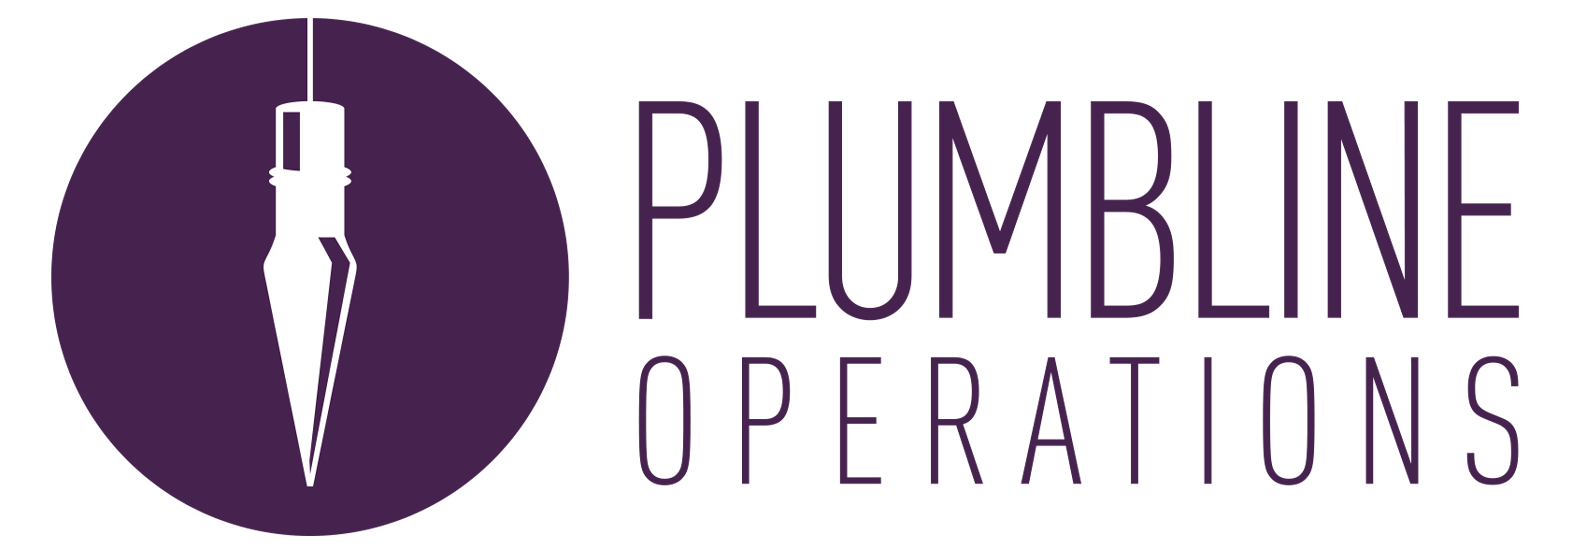 Plumbline Operations logo